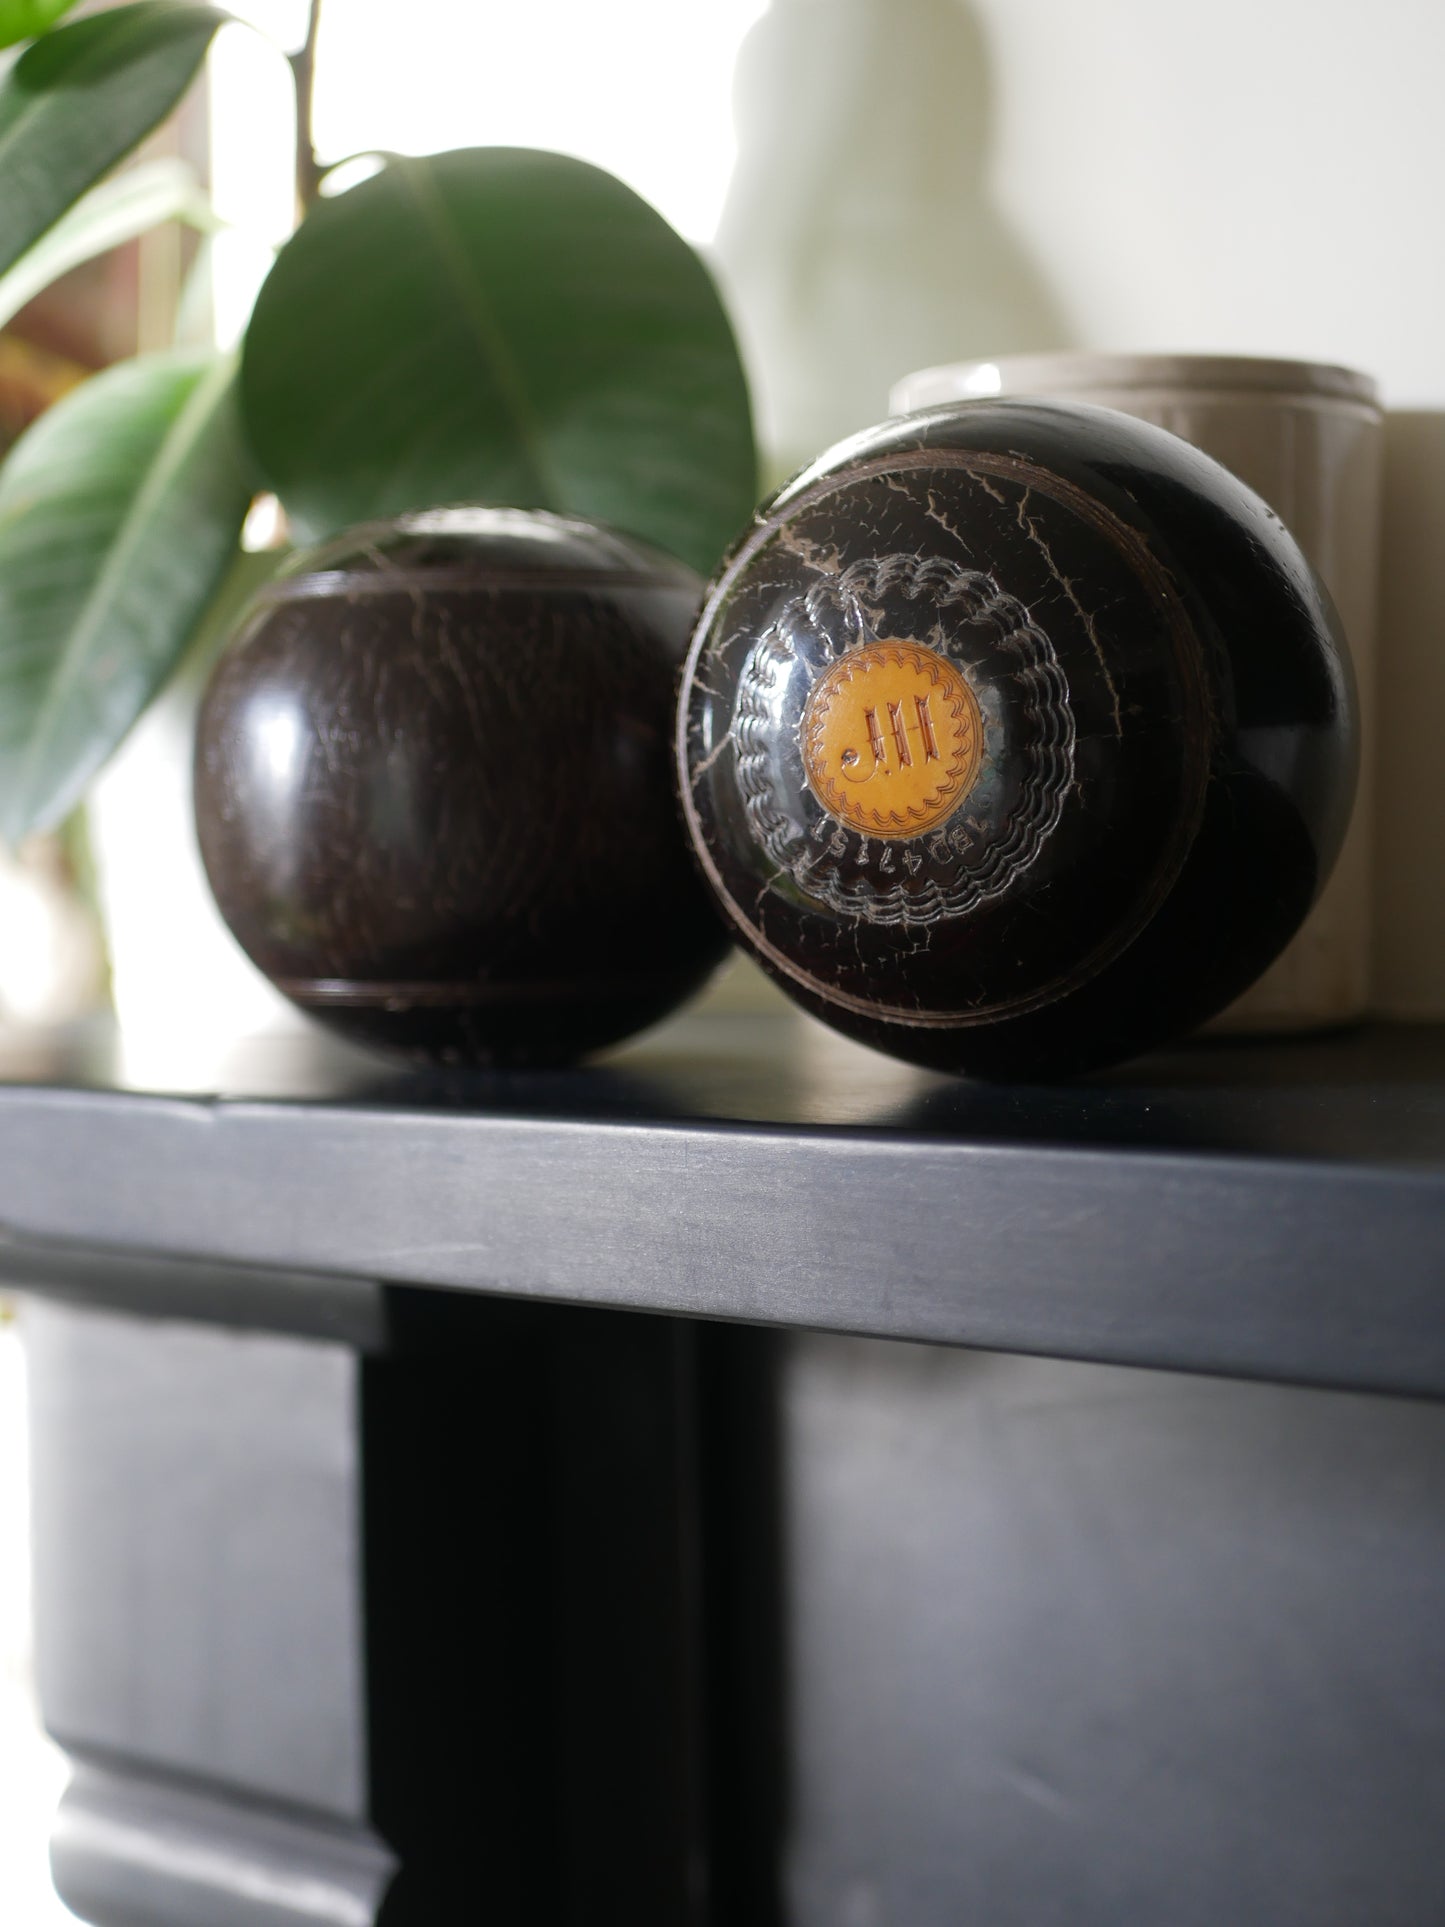 Pair of vintage lawn bowling balls